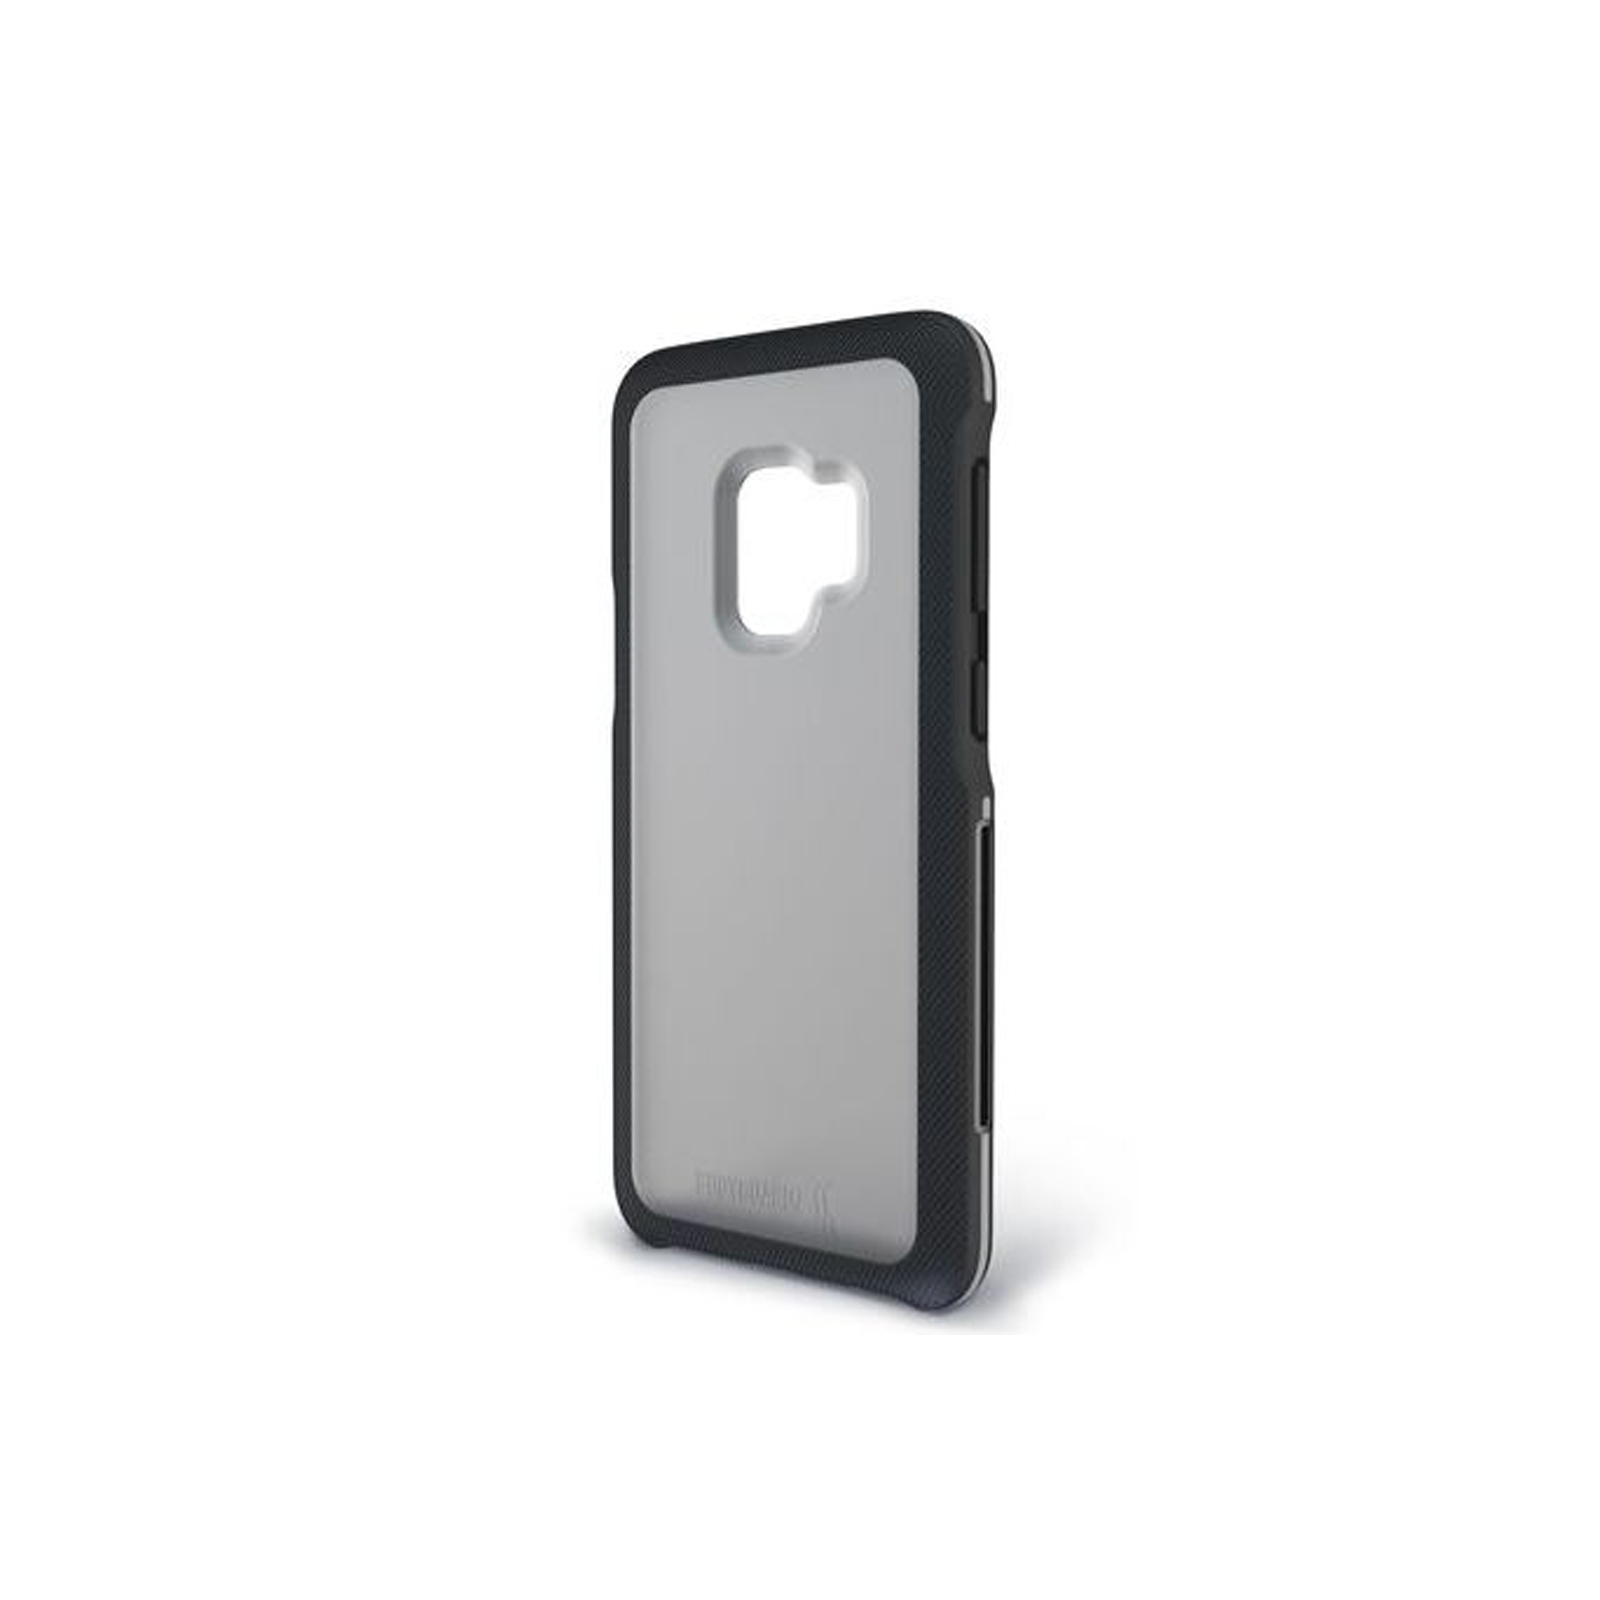 TrainrPro Samsung Galaxy S9 Plus WO Band Case [Black / Gray]